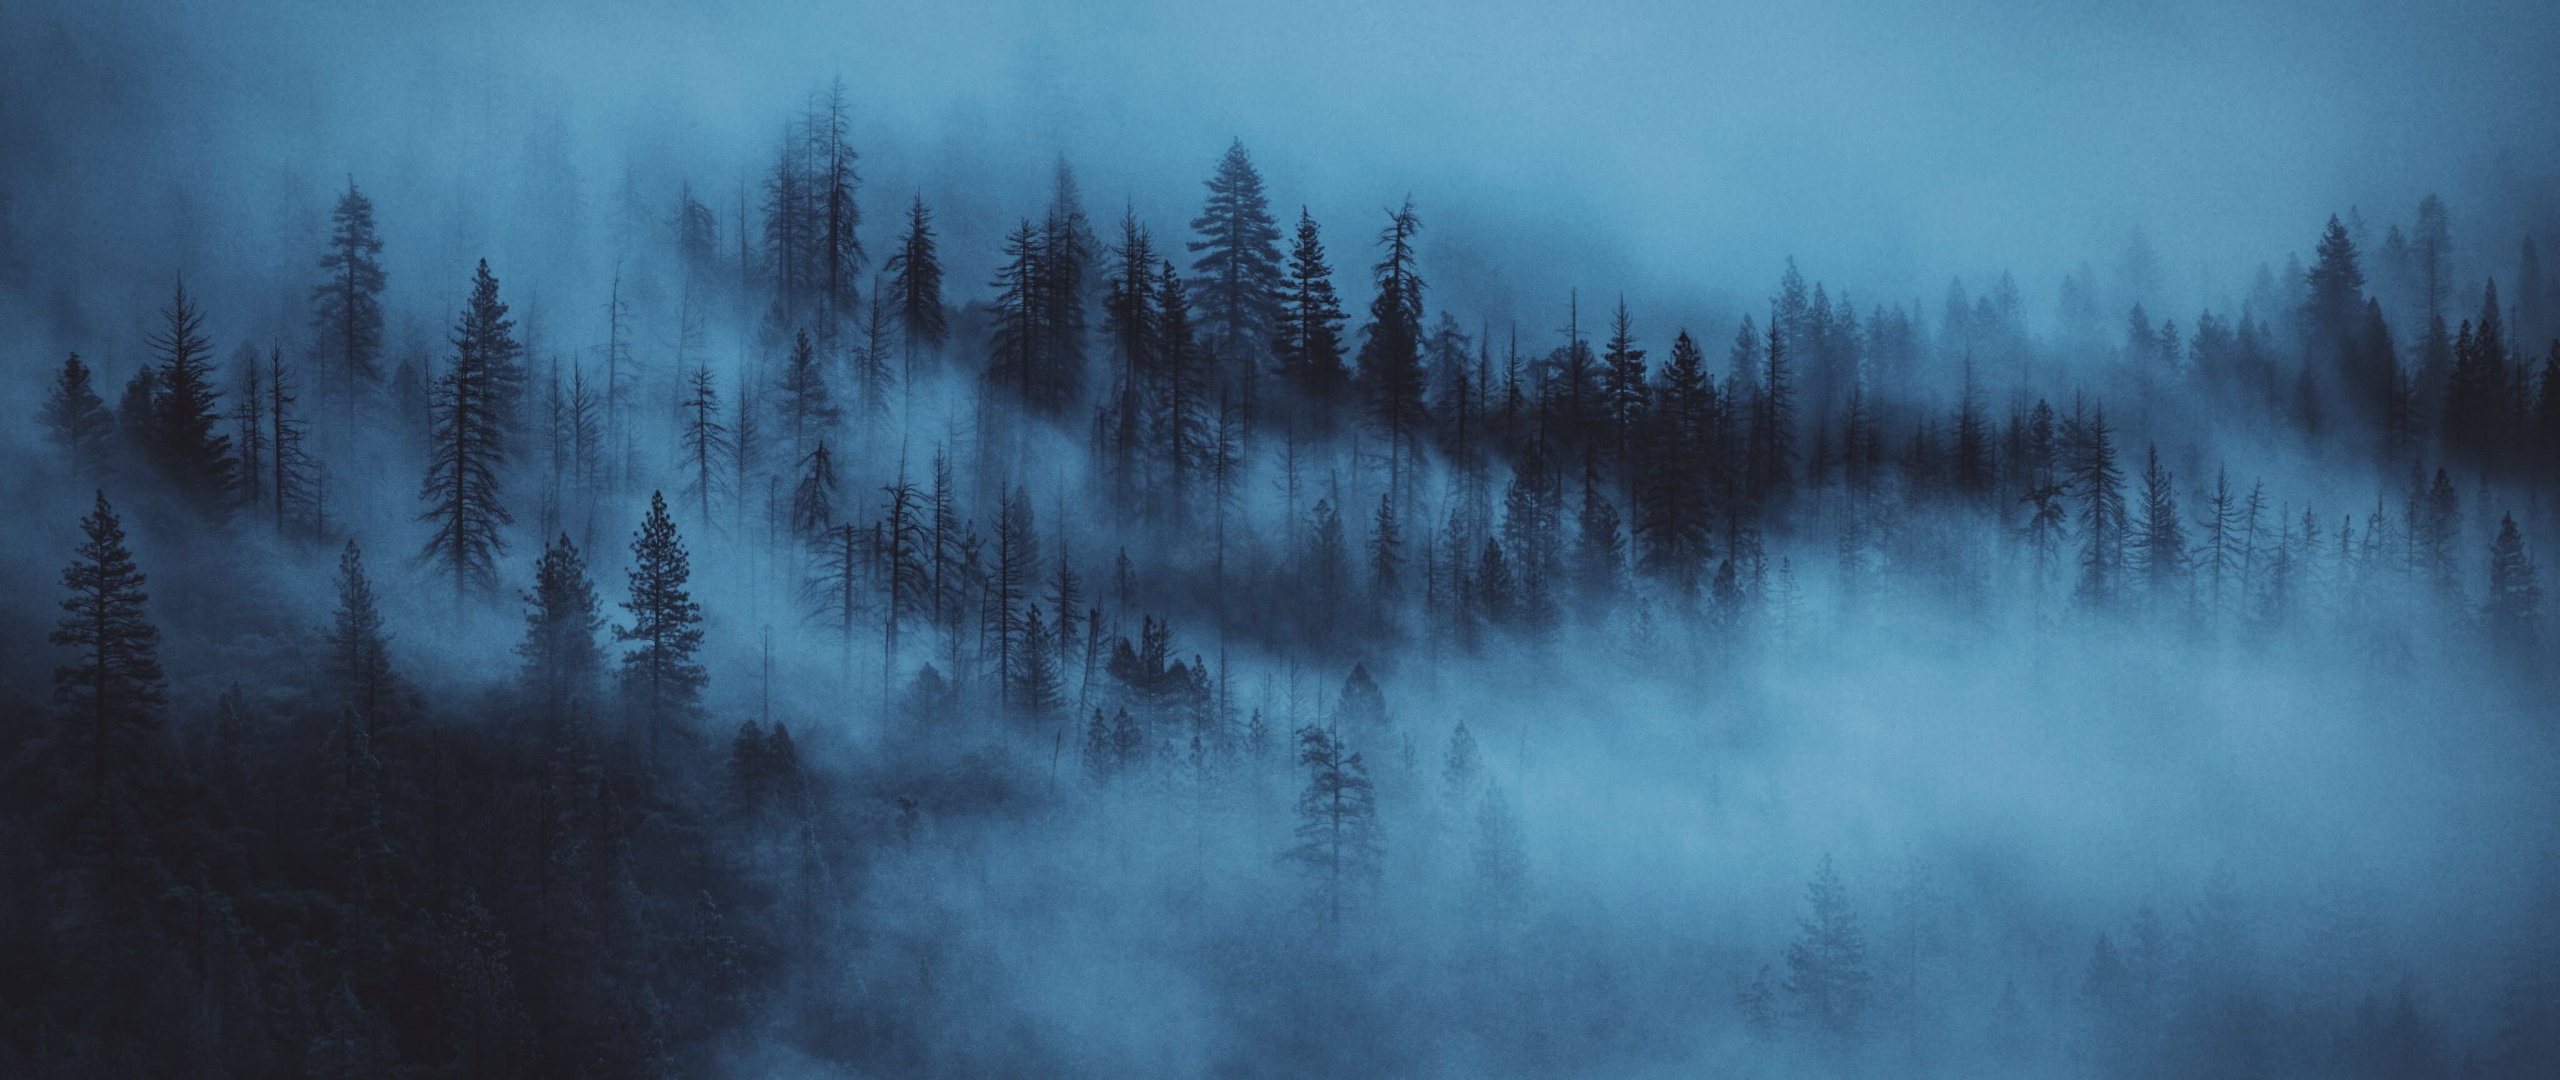 Download wallpaper 2560x1080 dark, mist, trees, forest, dual wide 2560x1080  hd background, 16864